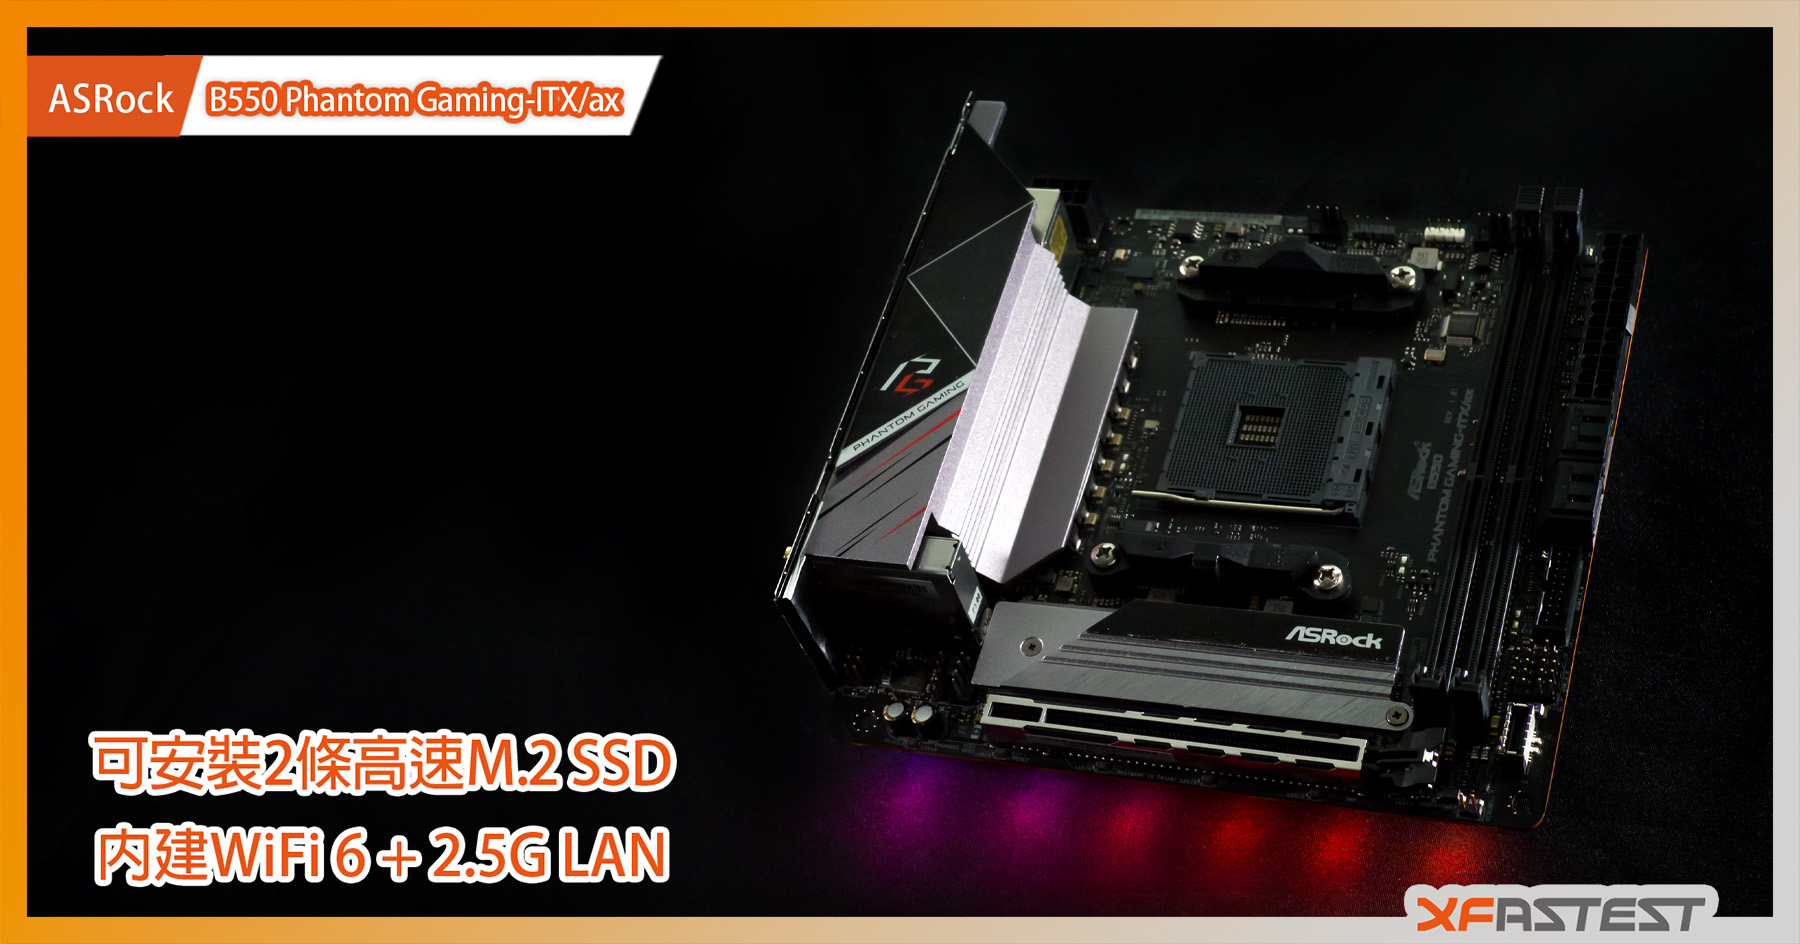 XF開箱] ASRock B550 Phantom Gaming-ITX/AX - 可安裝2條高速M.2 SSD